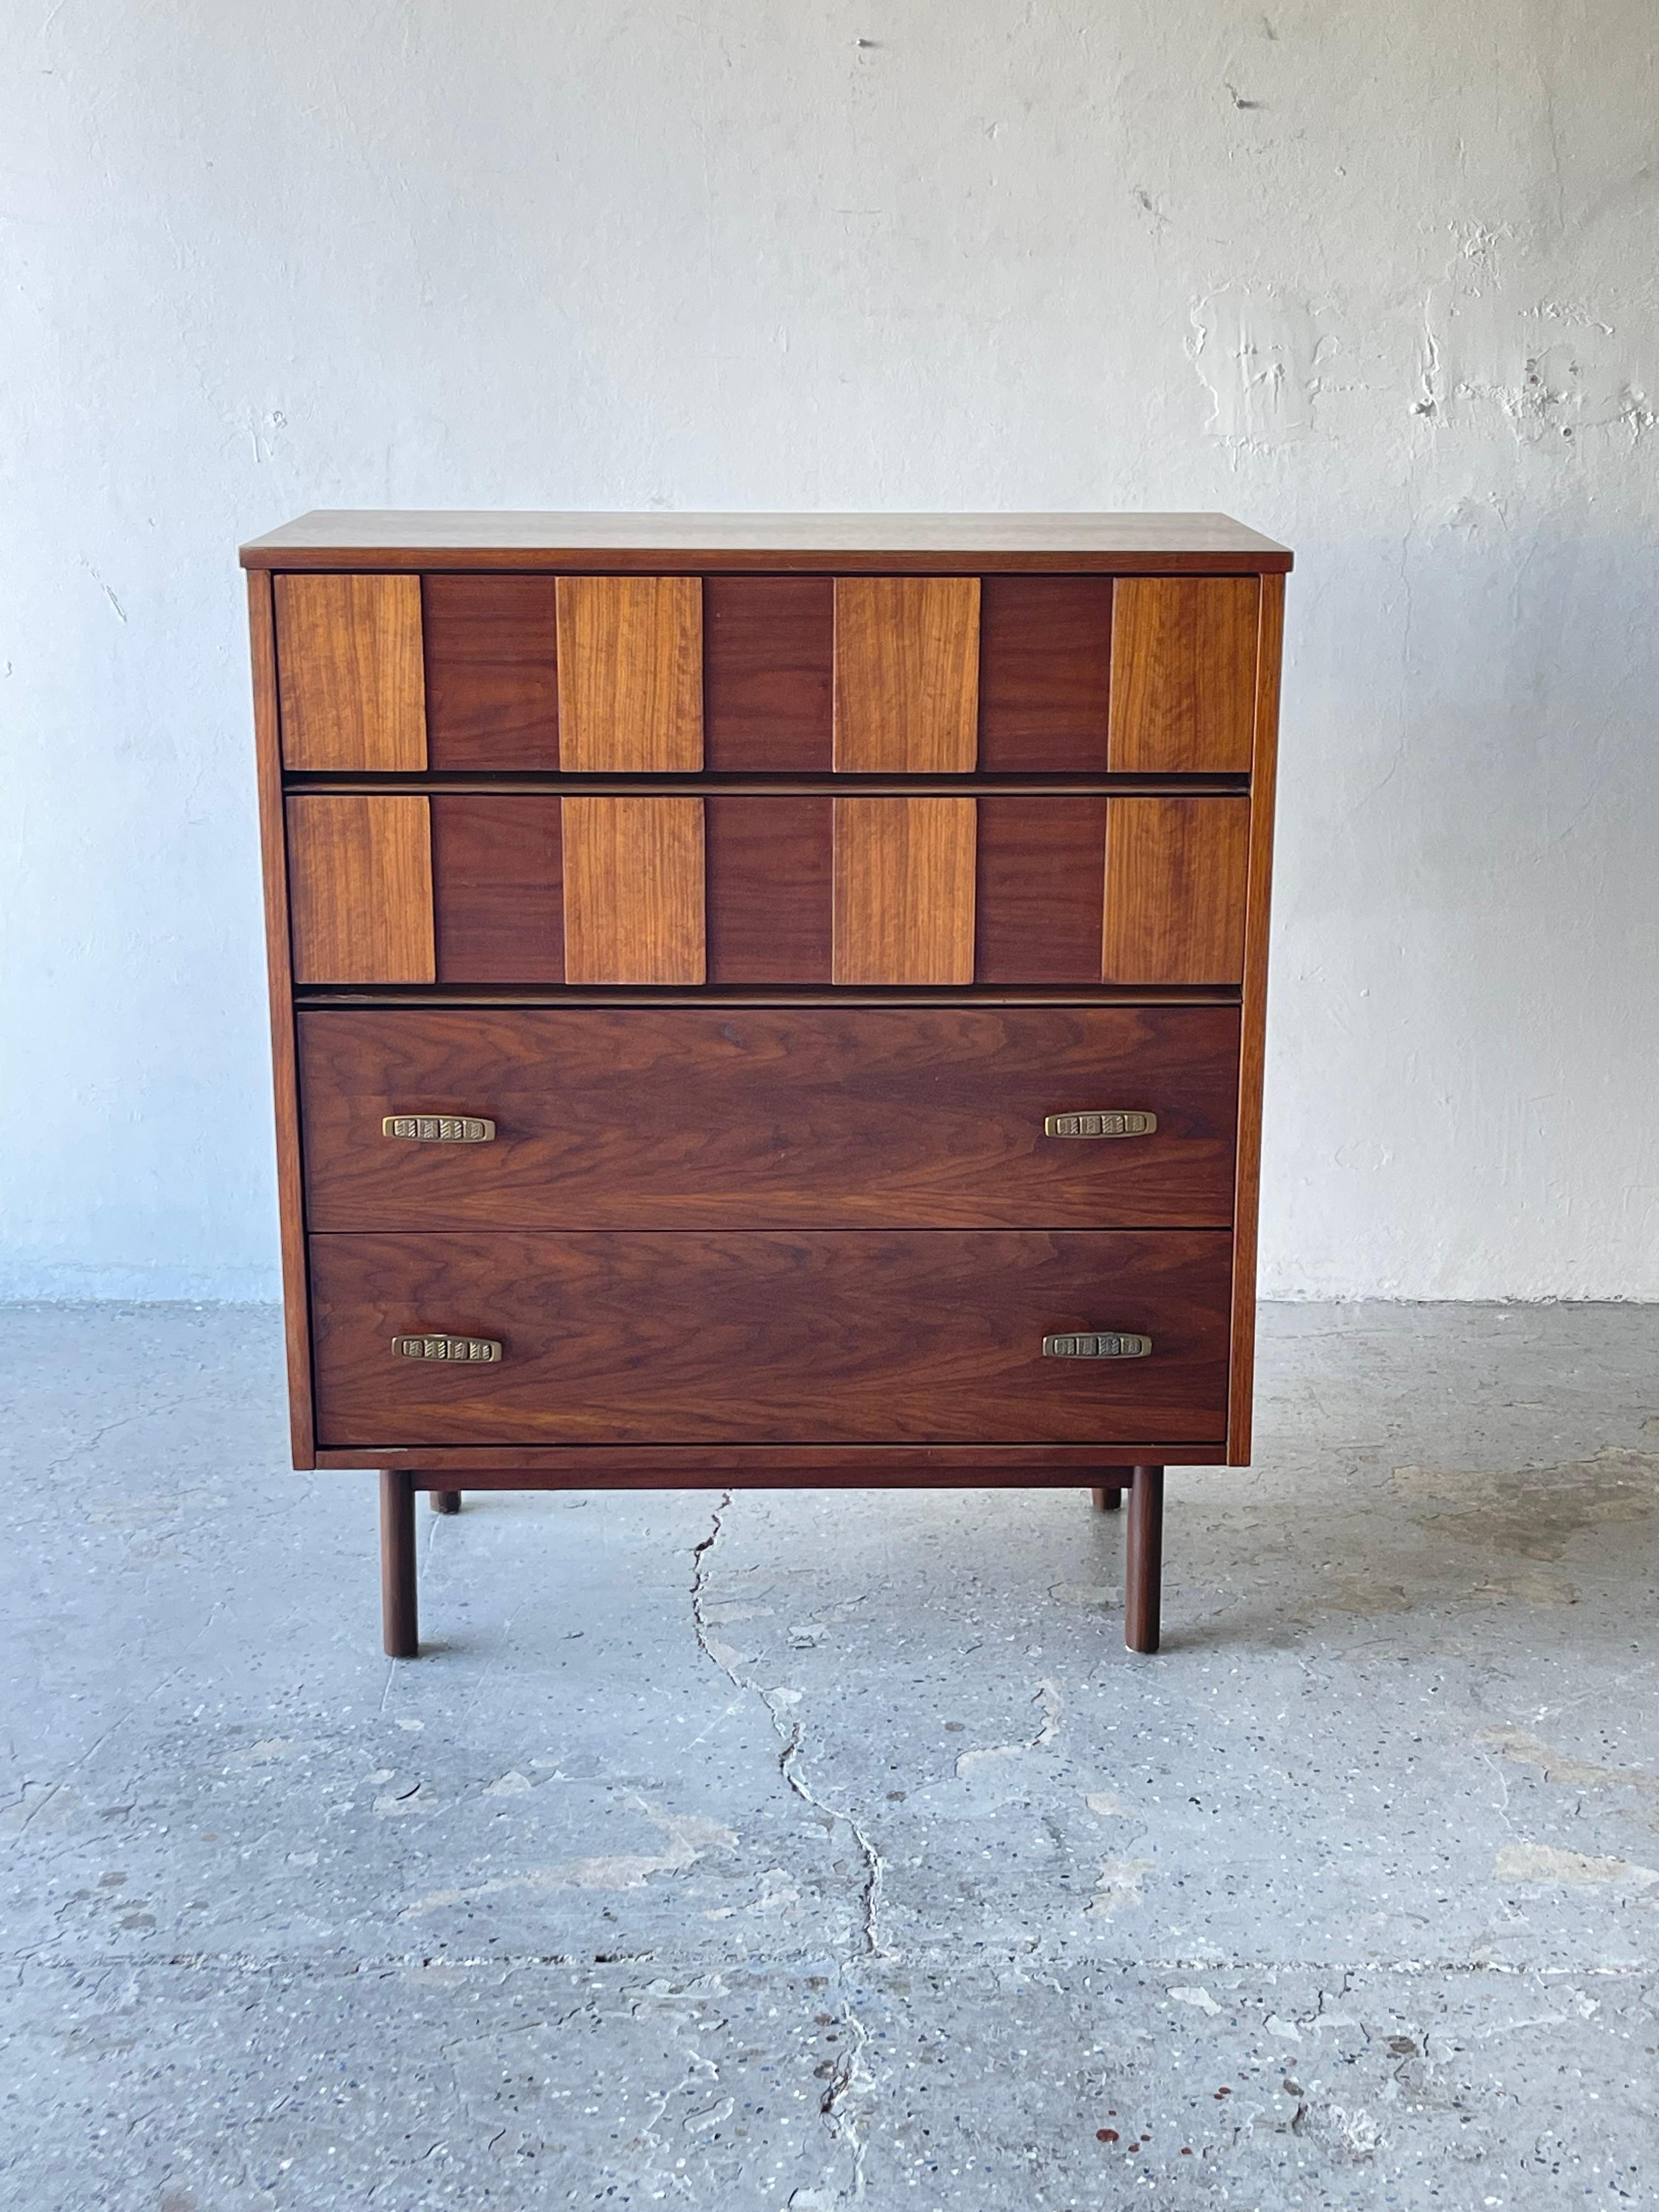 Beautiful Mid-Century Modern Bassett Furniture high-boy dresser.

Measures: 36” wide 18” deep 42 ” high.

Professionally refinished and restored.

